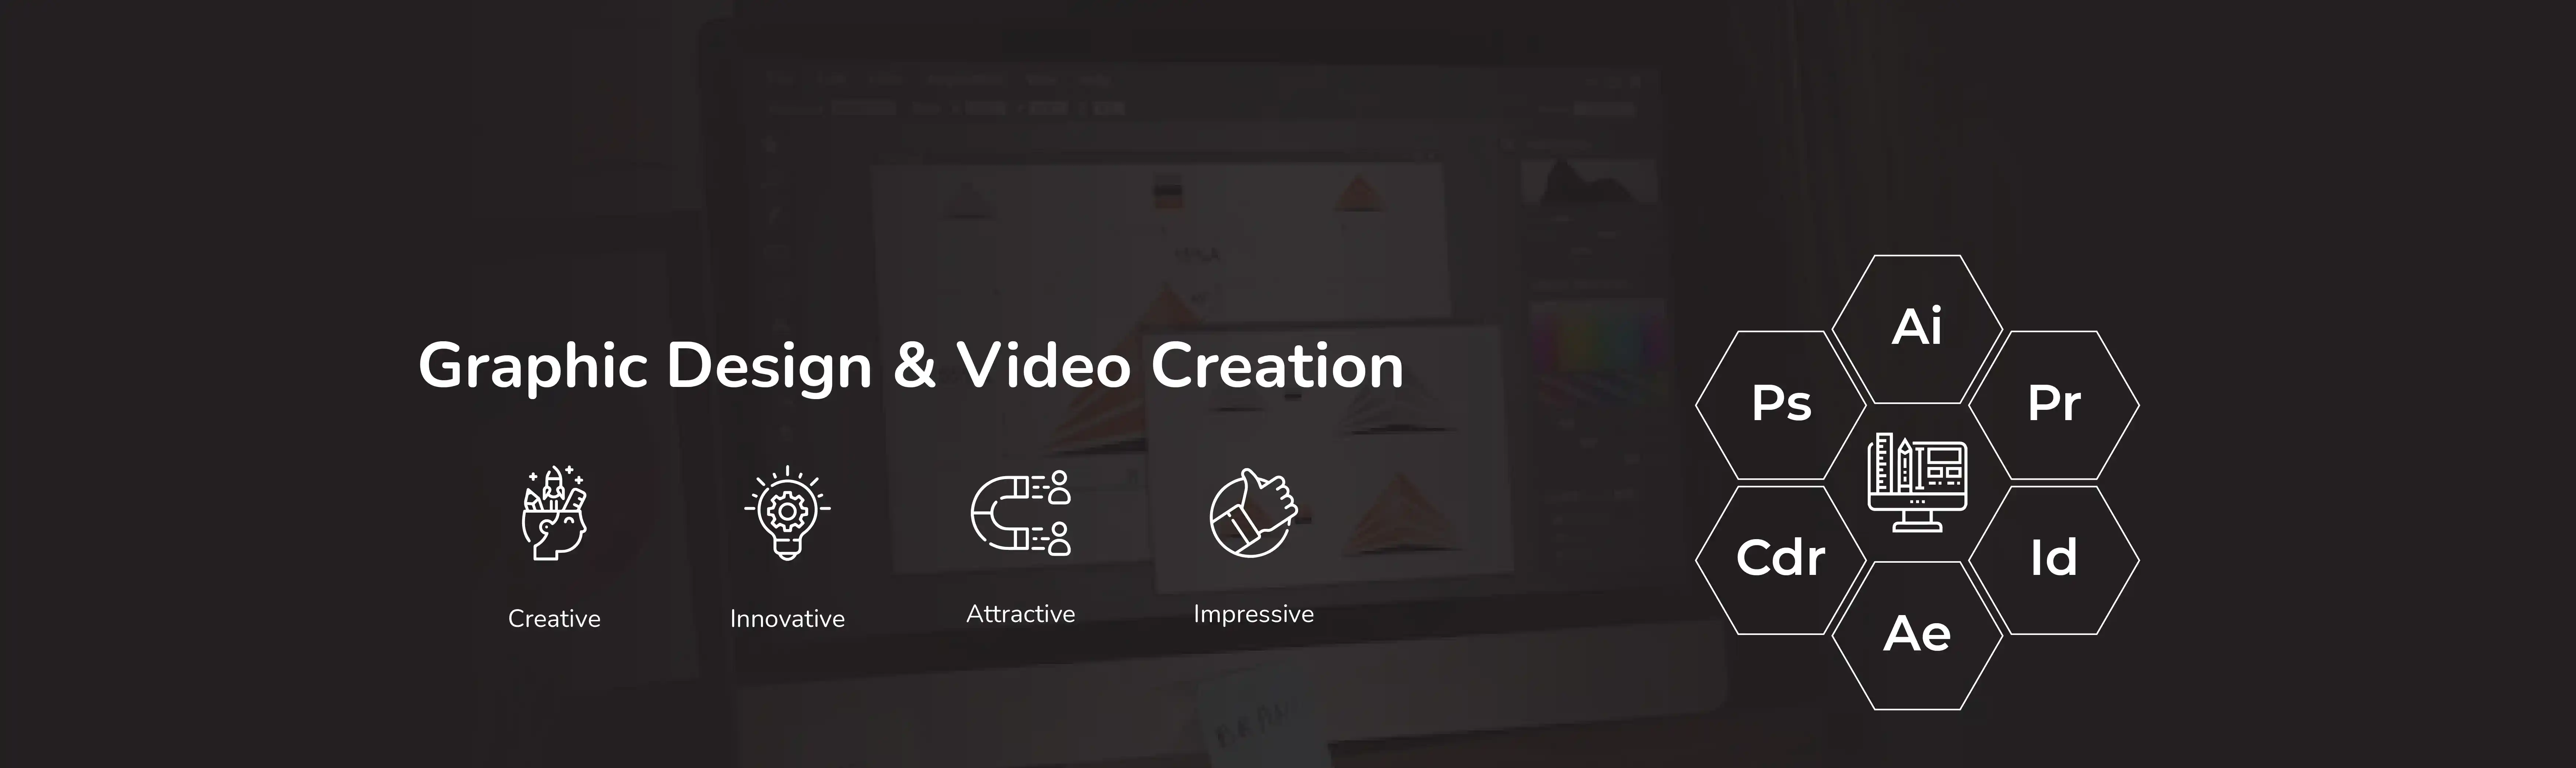 graphic-design-video-creation-home-banner.webp